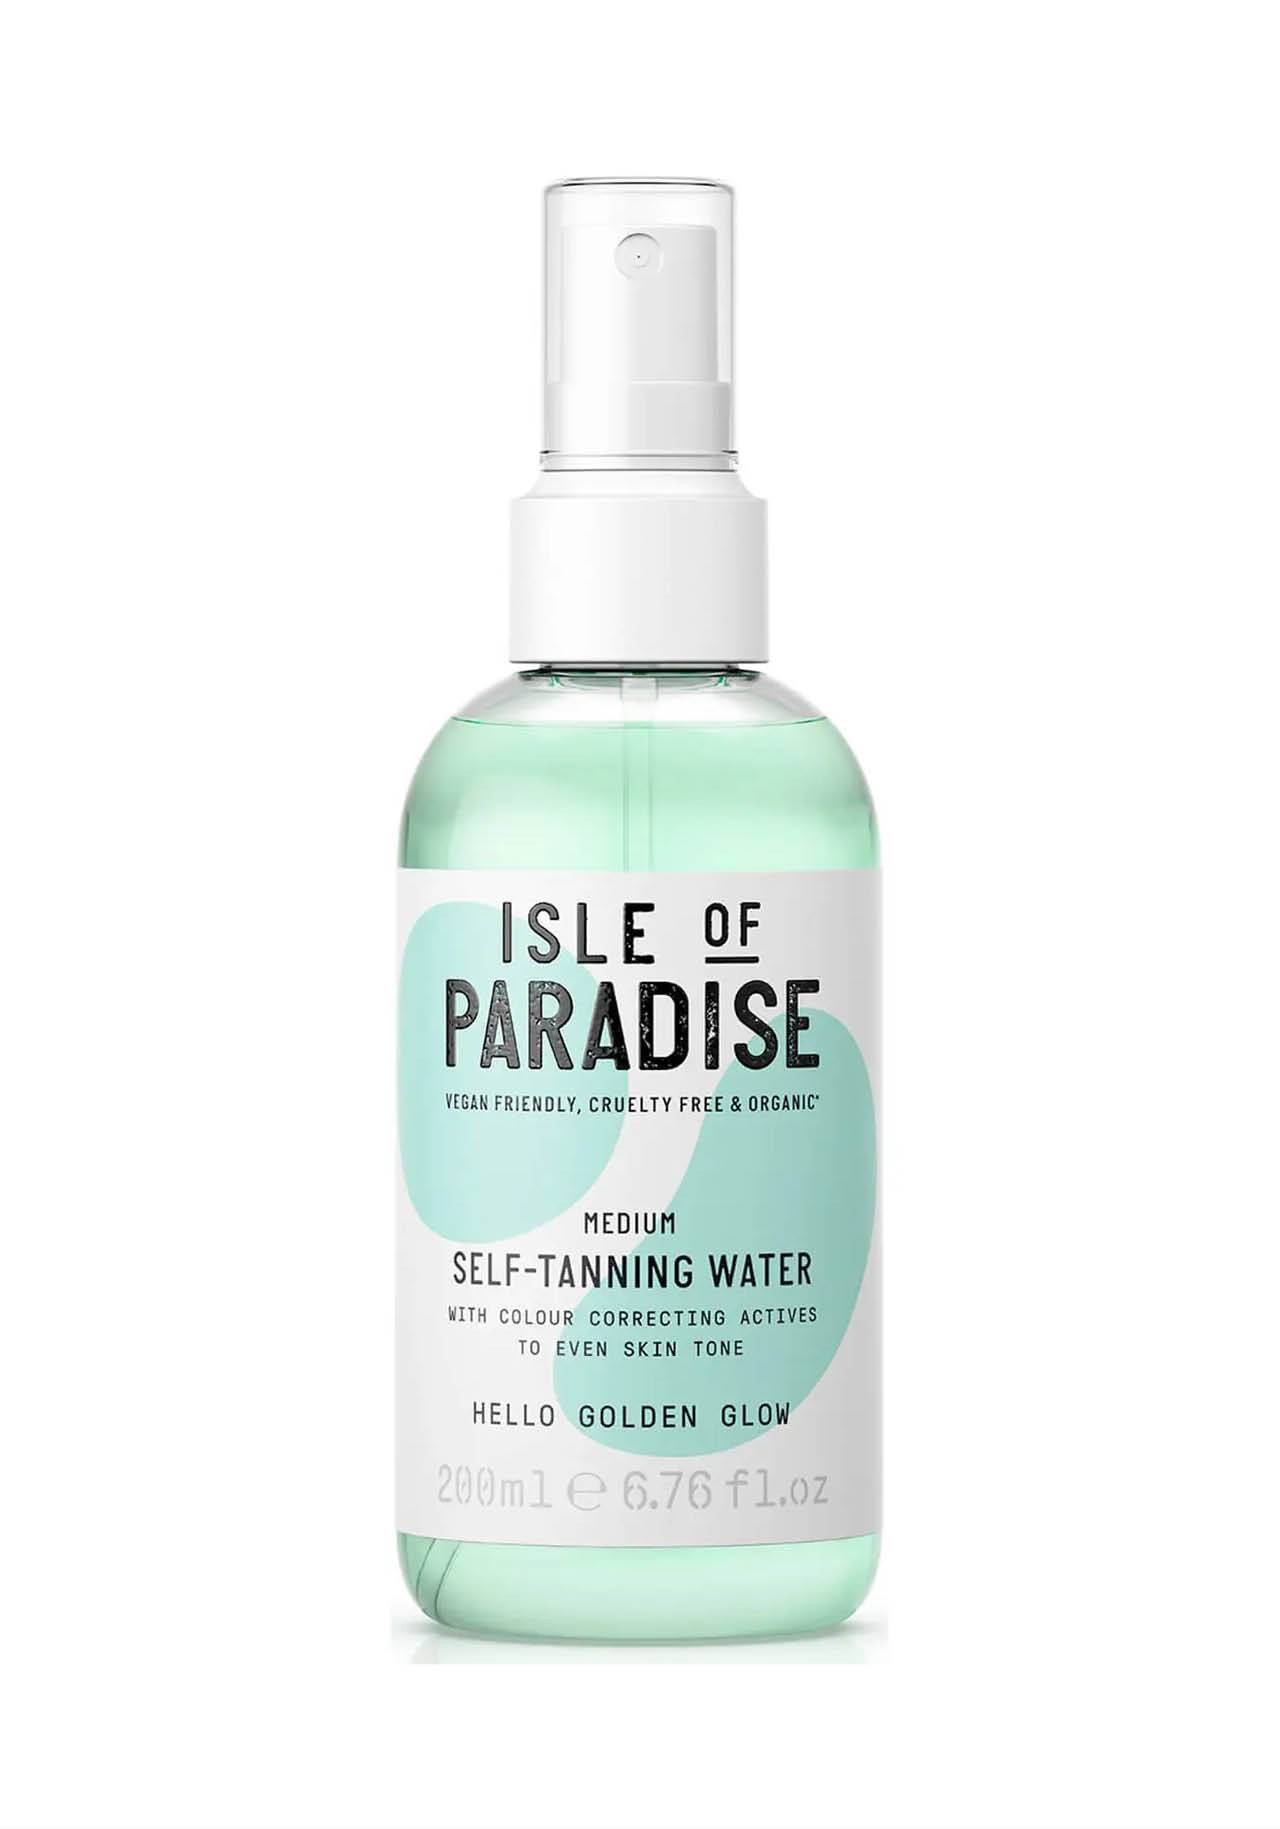 Agua autobronceadora de Isle of Paradise